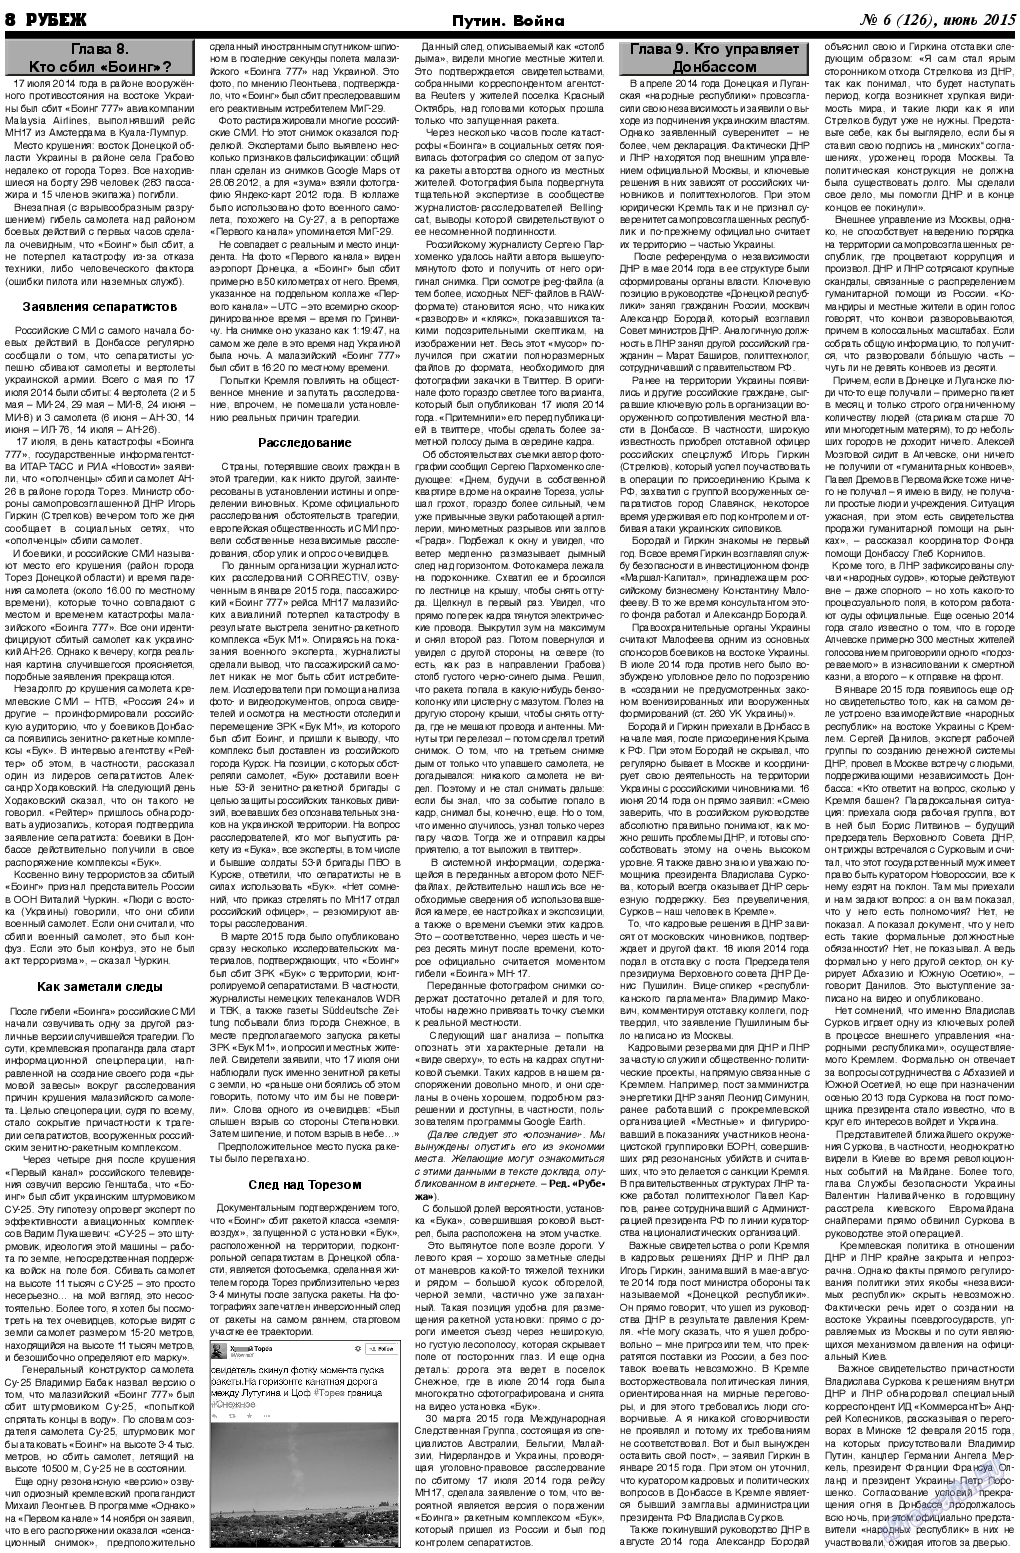 Рубеж, газета. 2015 №6 стр.8